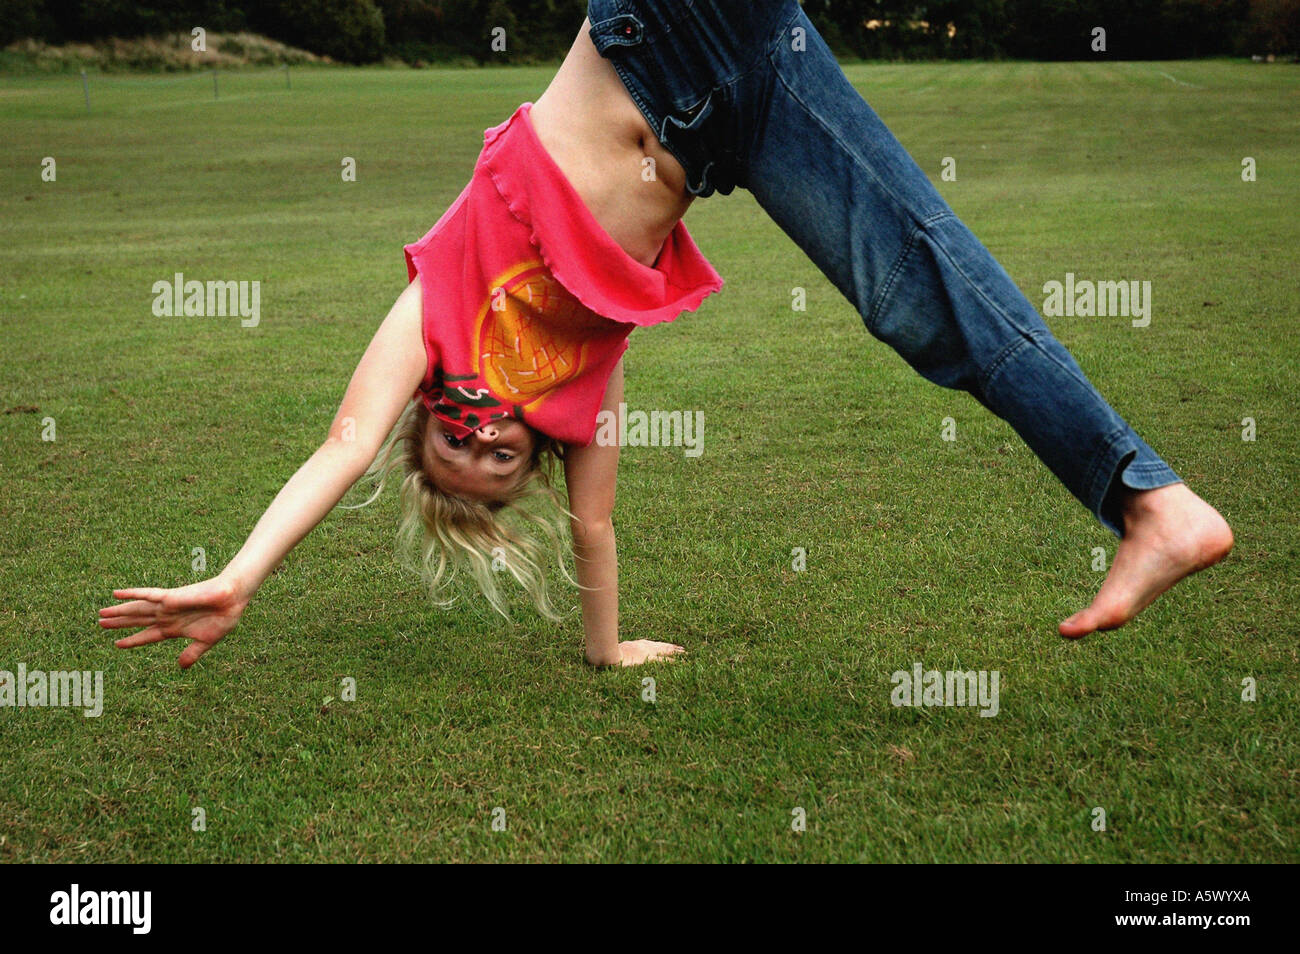 girl doing a cartwheel at the park Stock Photo